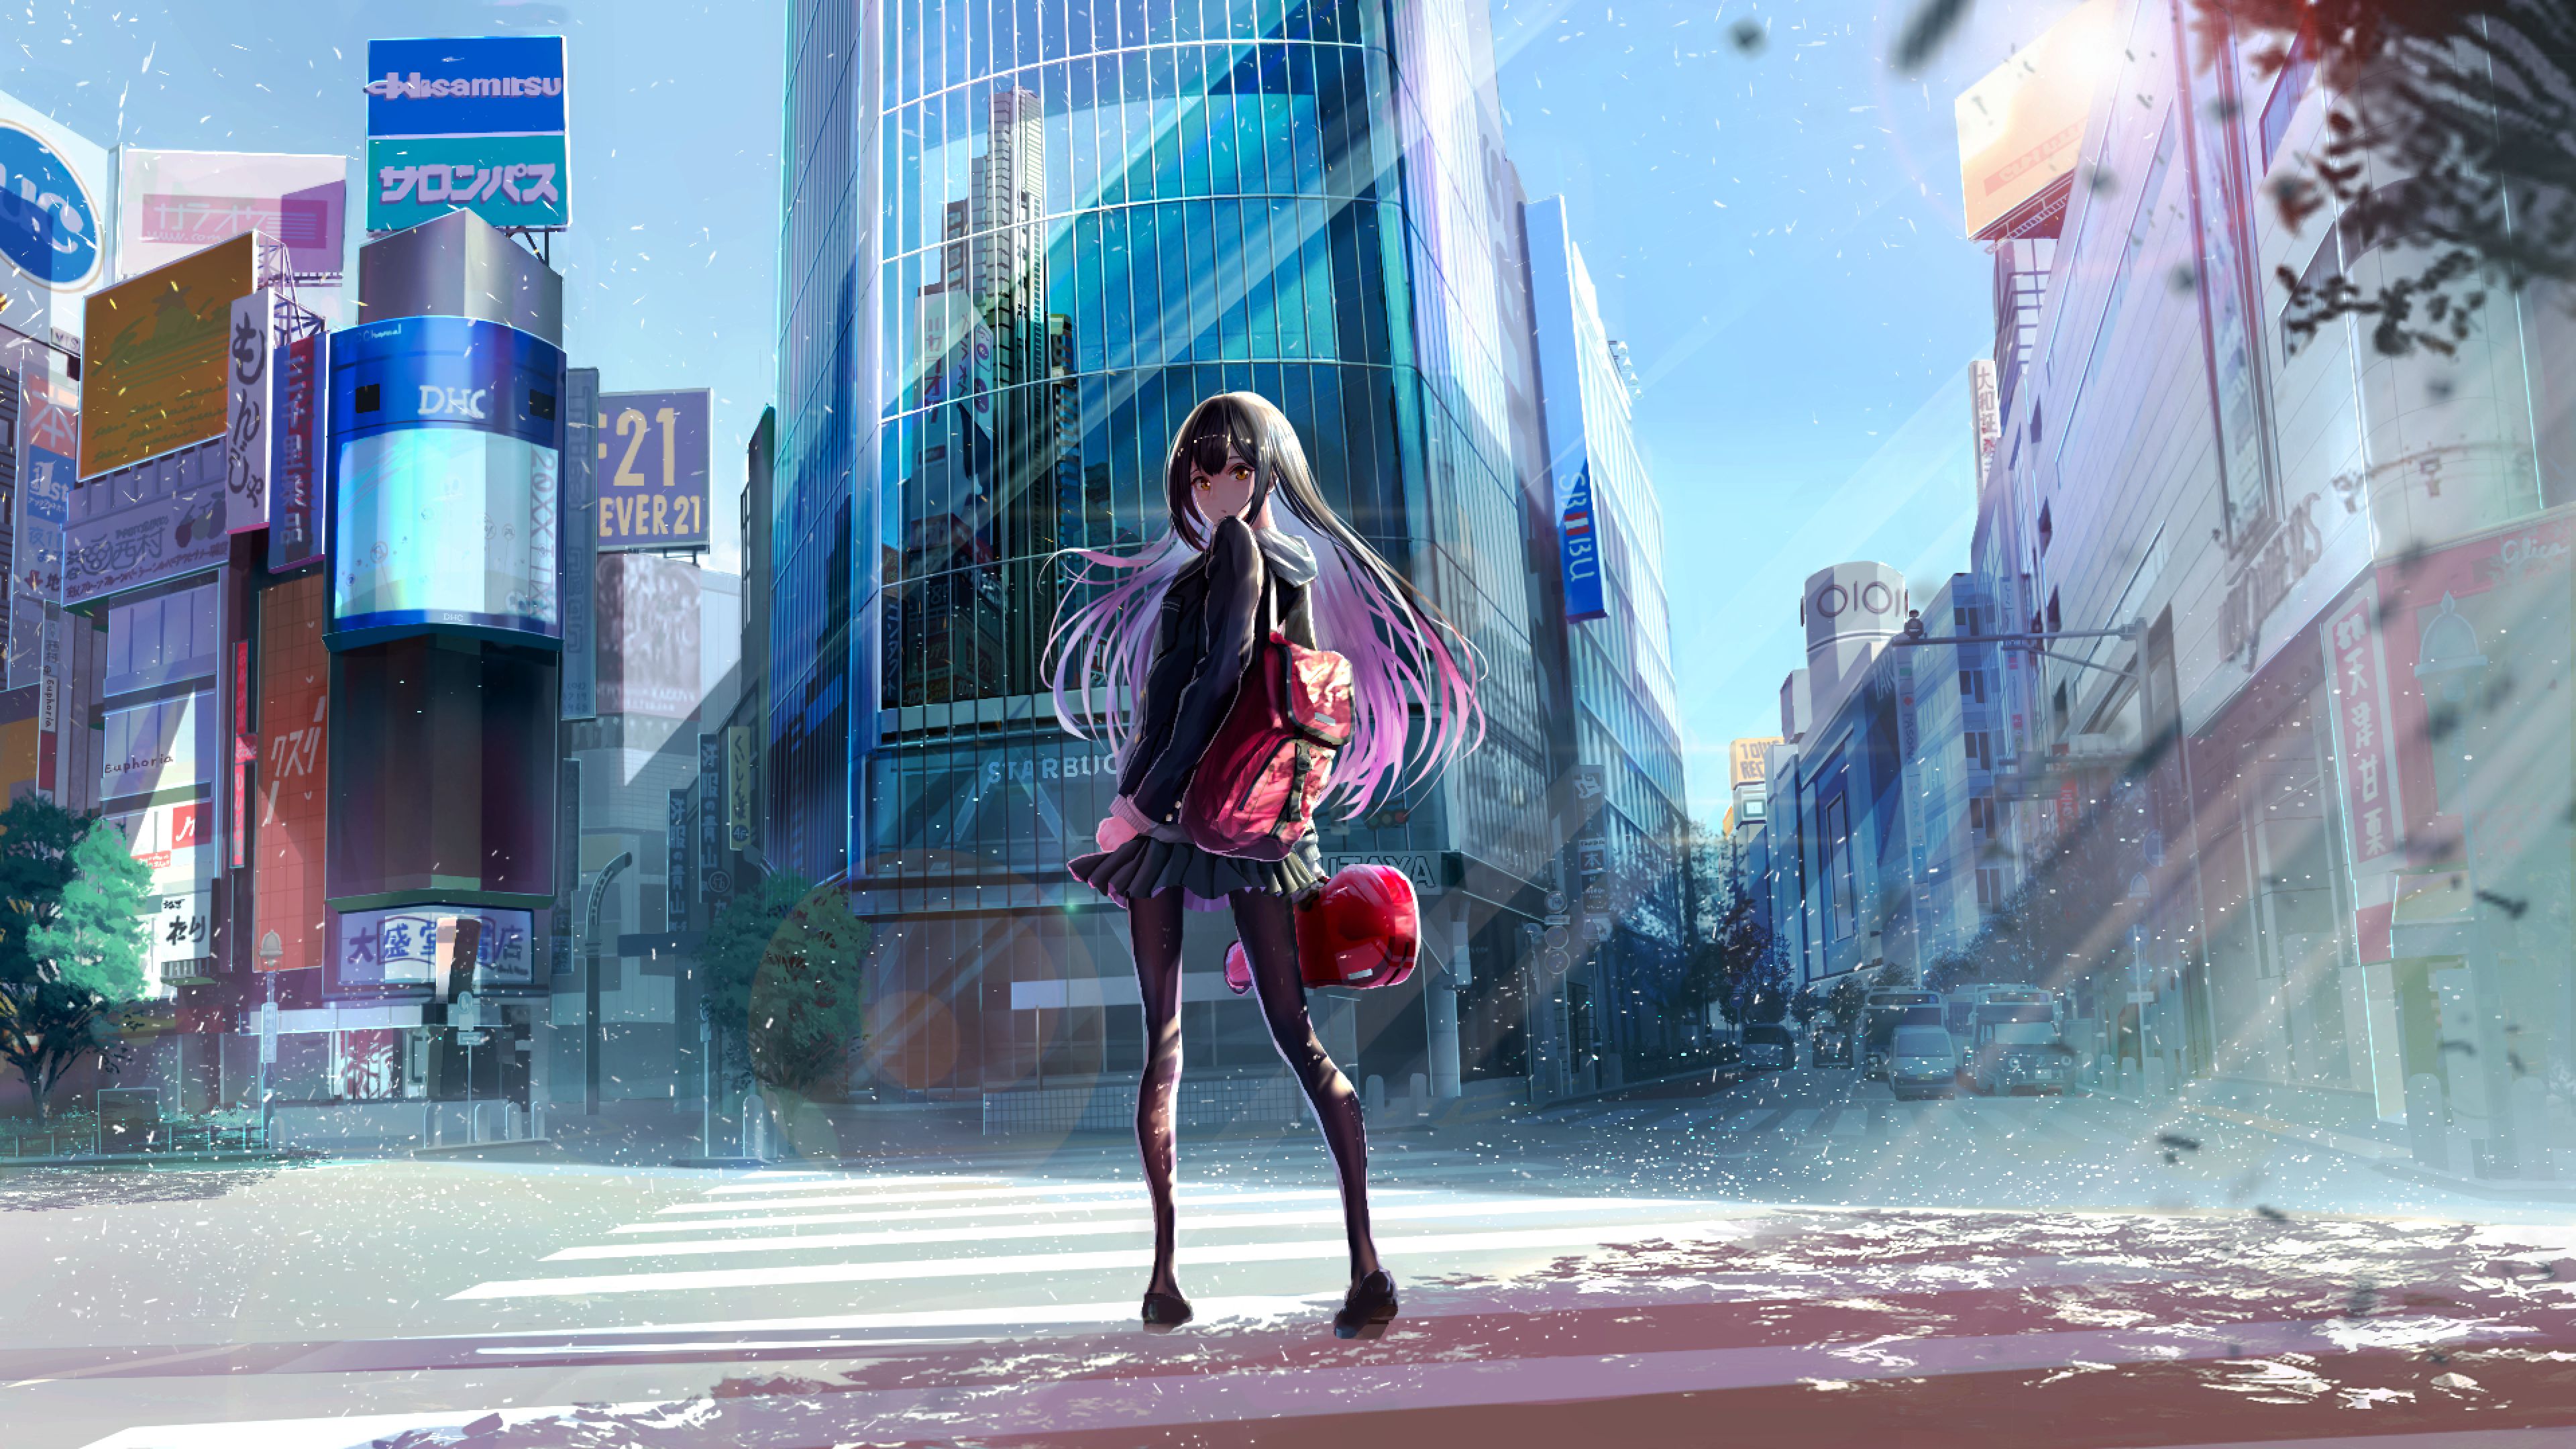 School Anime Girl 4K Wallpaper, HD Anime 4K Wallpaper, Image, Photo and Background